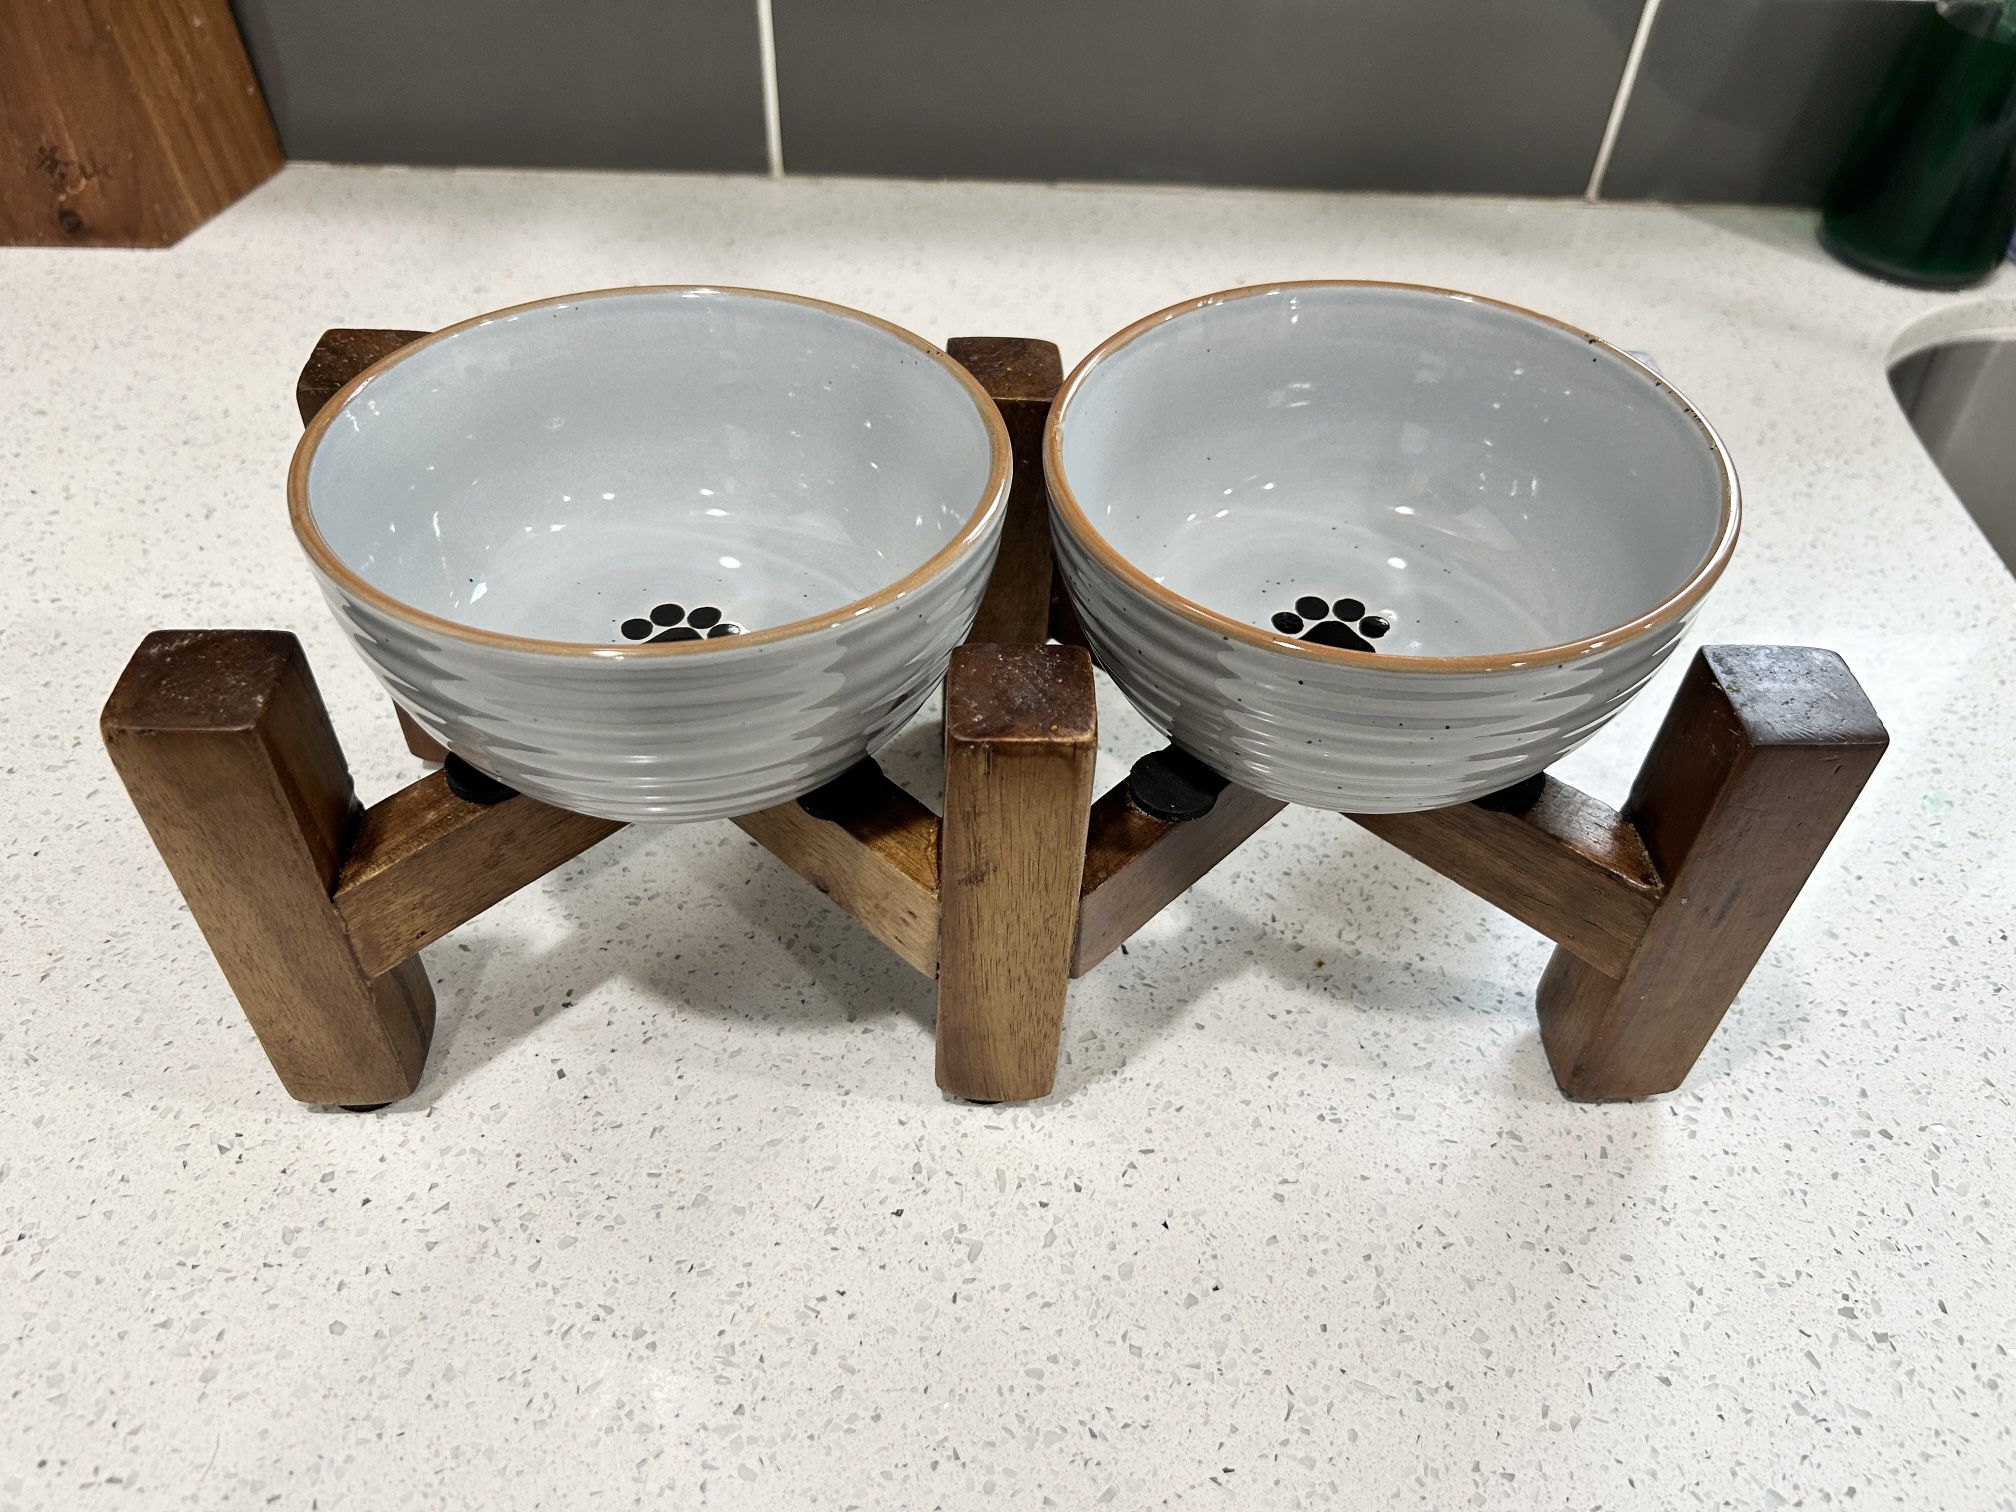 Ceramic Pet Bowl Set